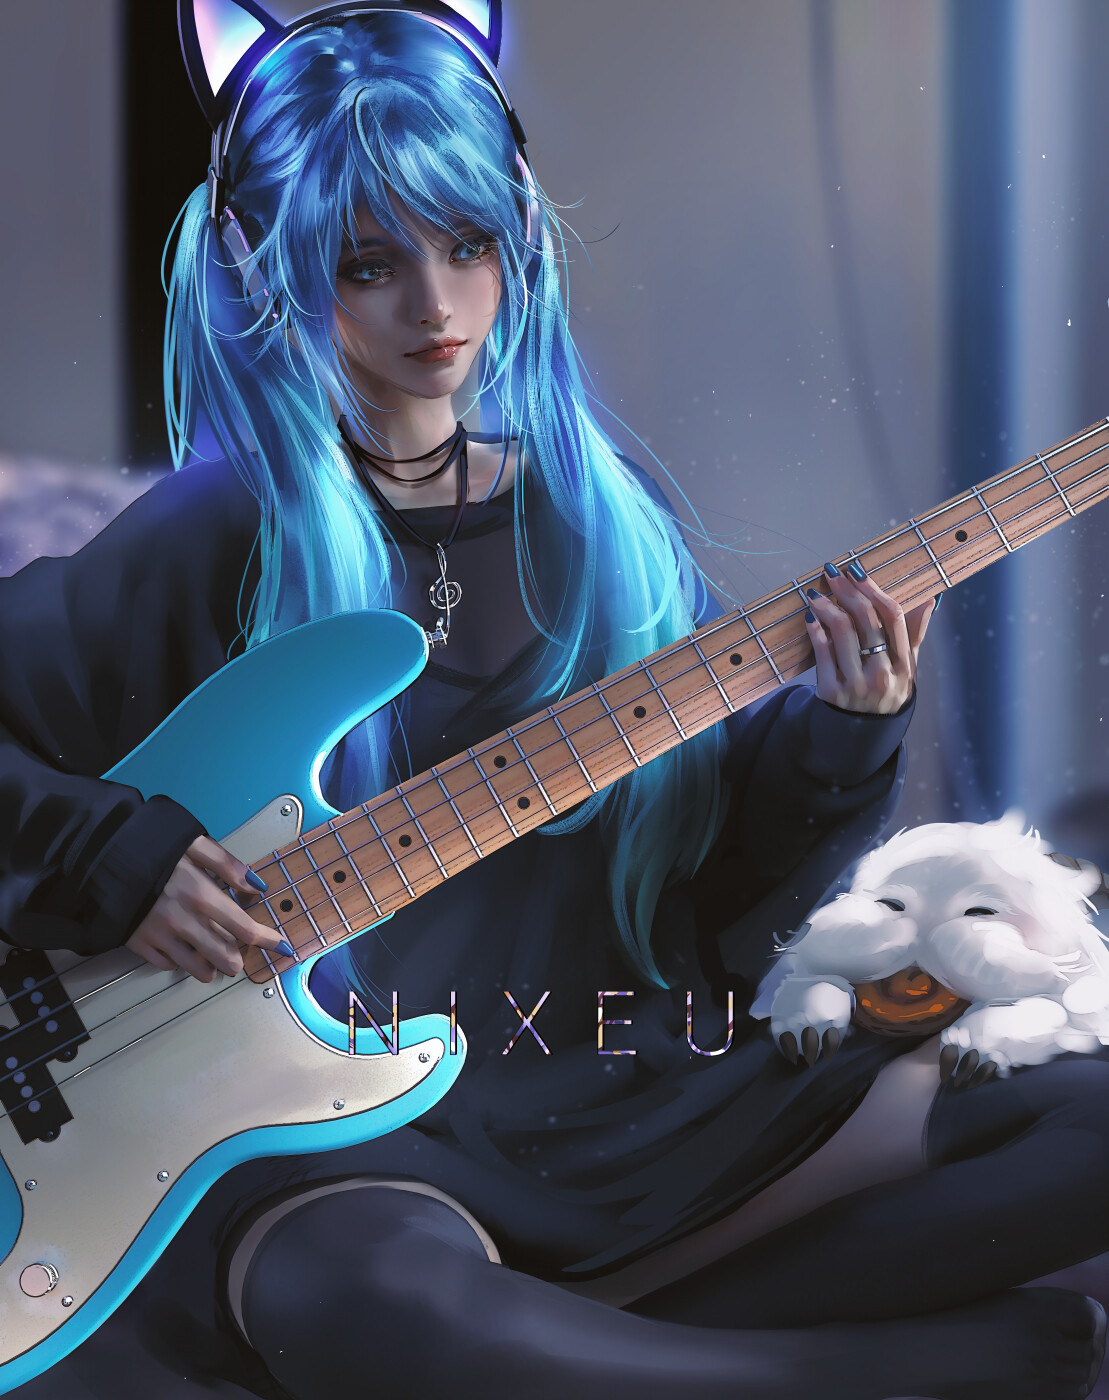 General 1109x1400 Nixeu drawing women Sona (League of Legends) blue hair blue eyes indoors bass guitars